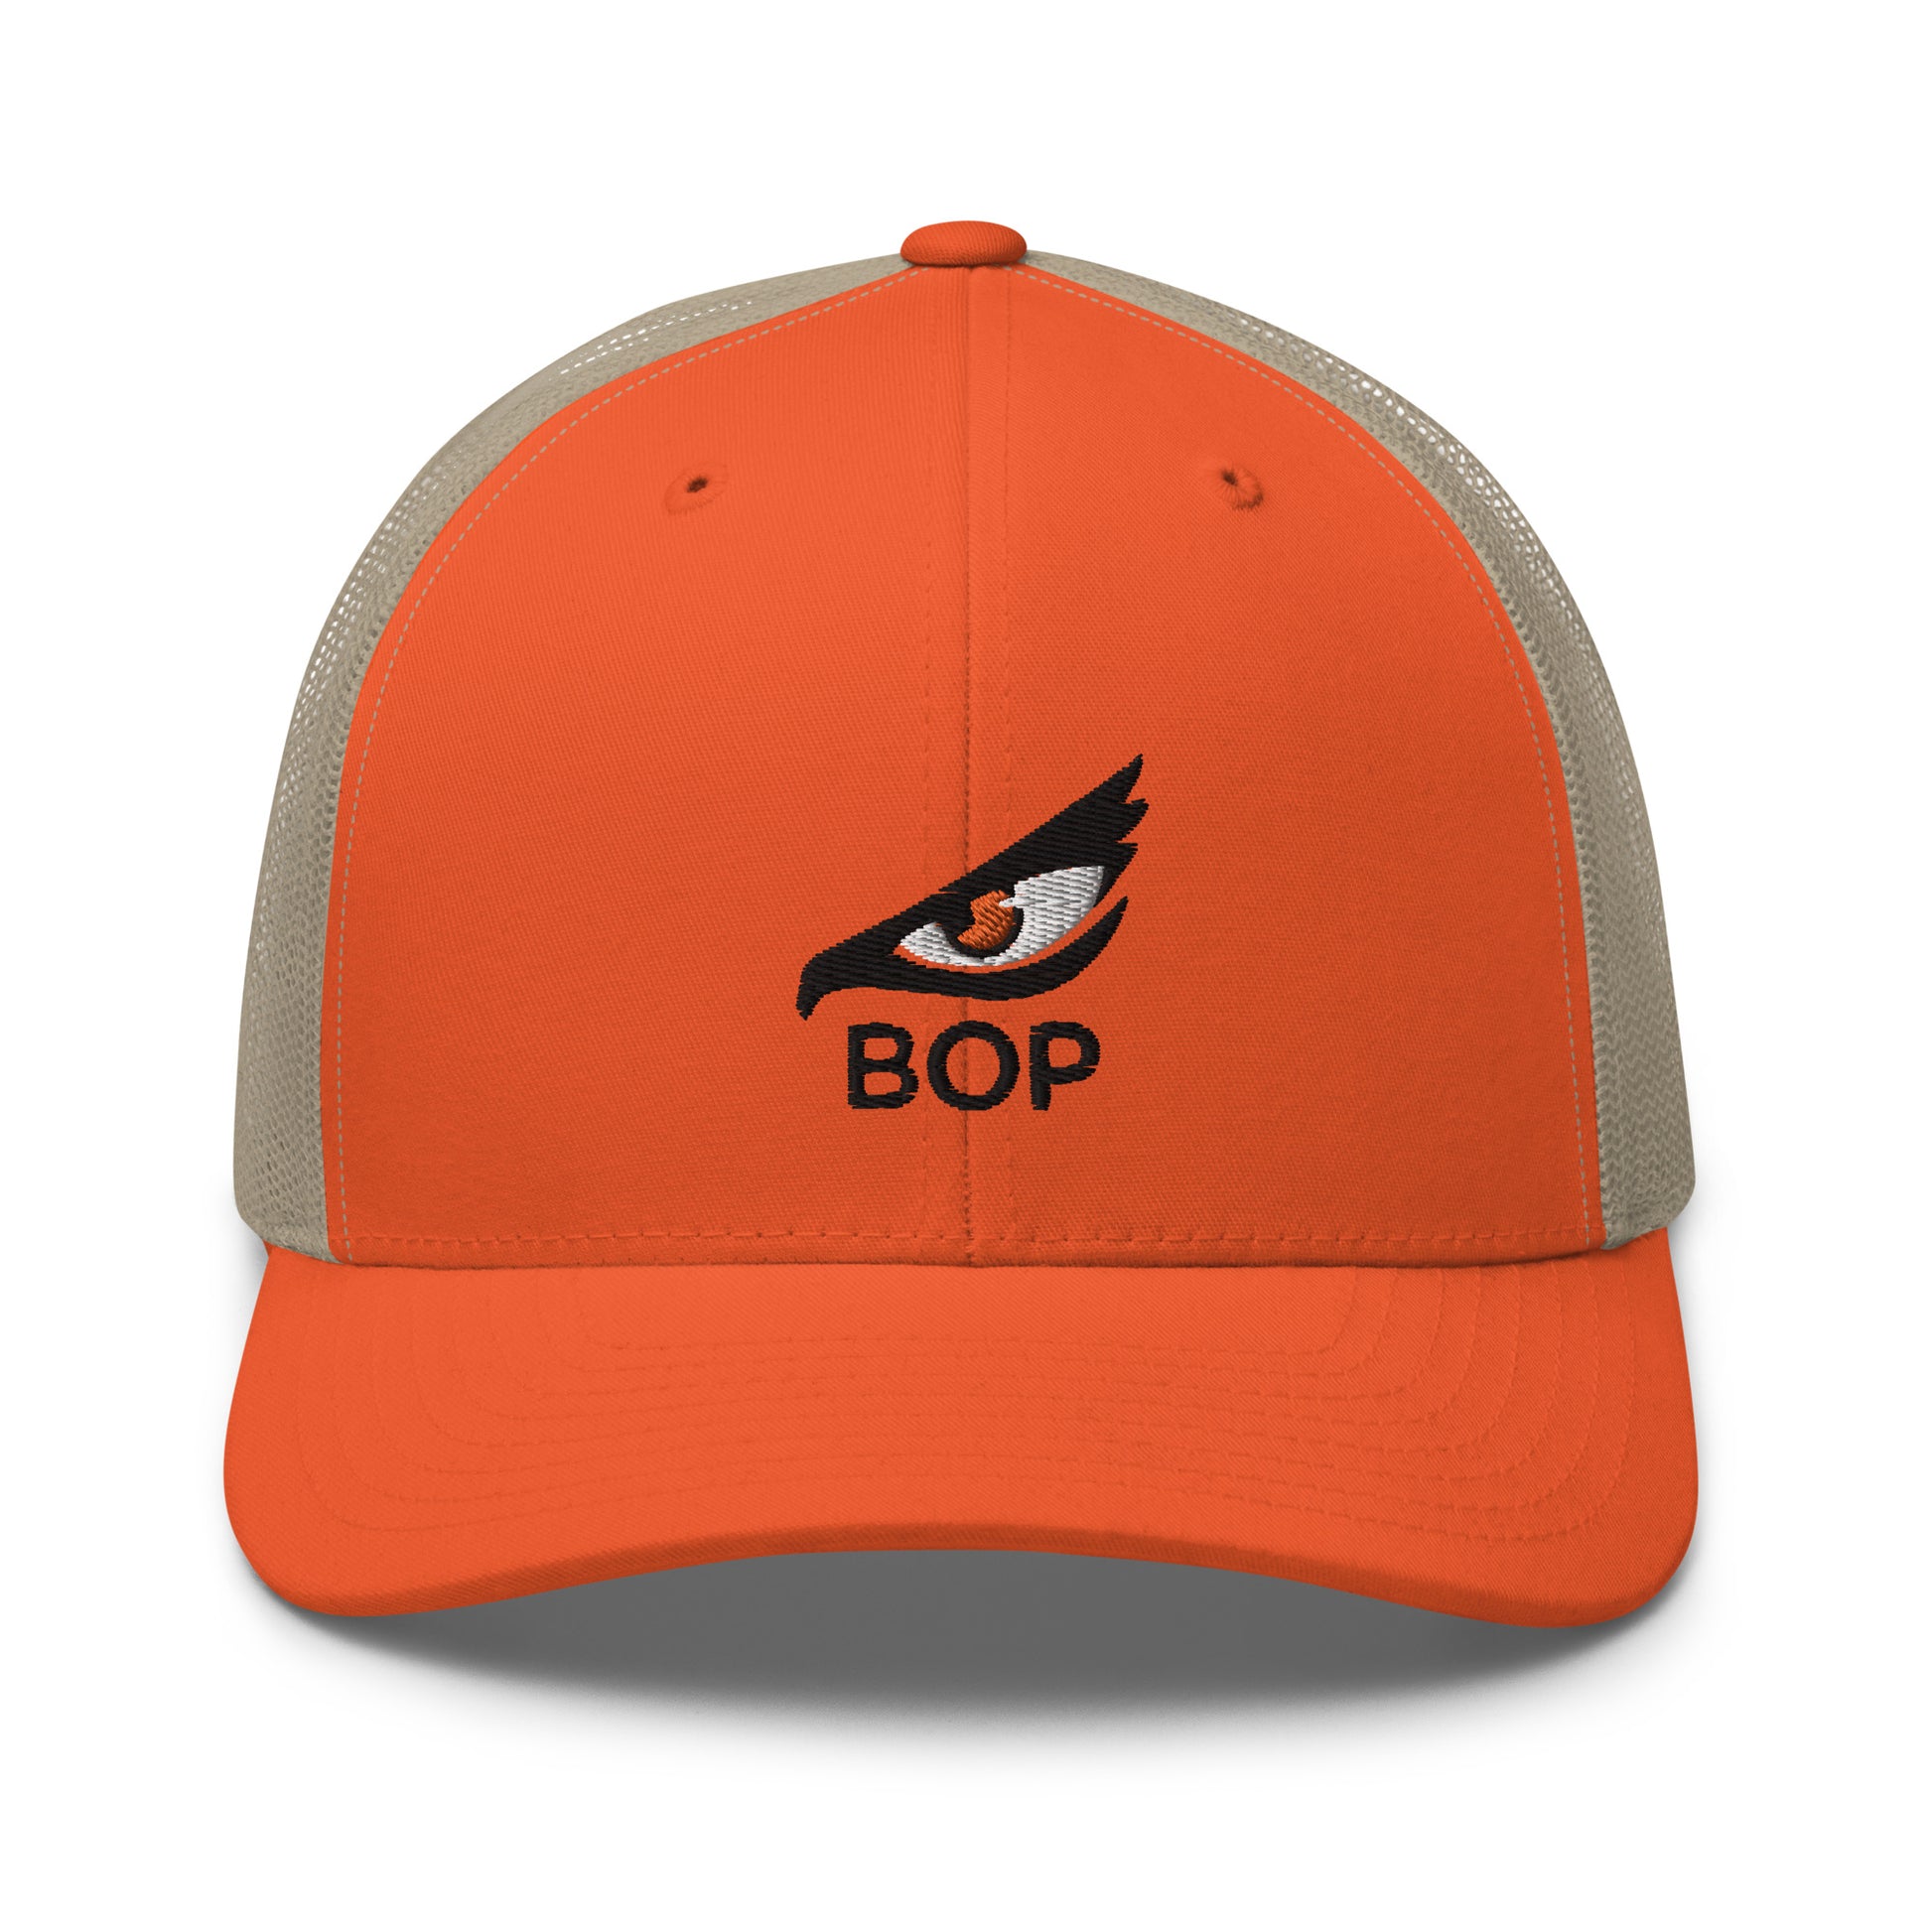 Orange Trucker Hat for Men with Mesh Back and Eagle Eye